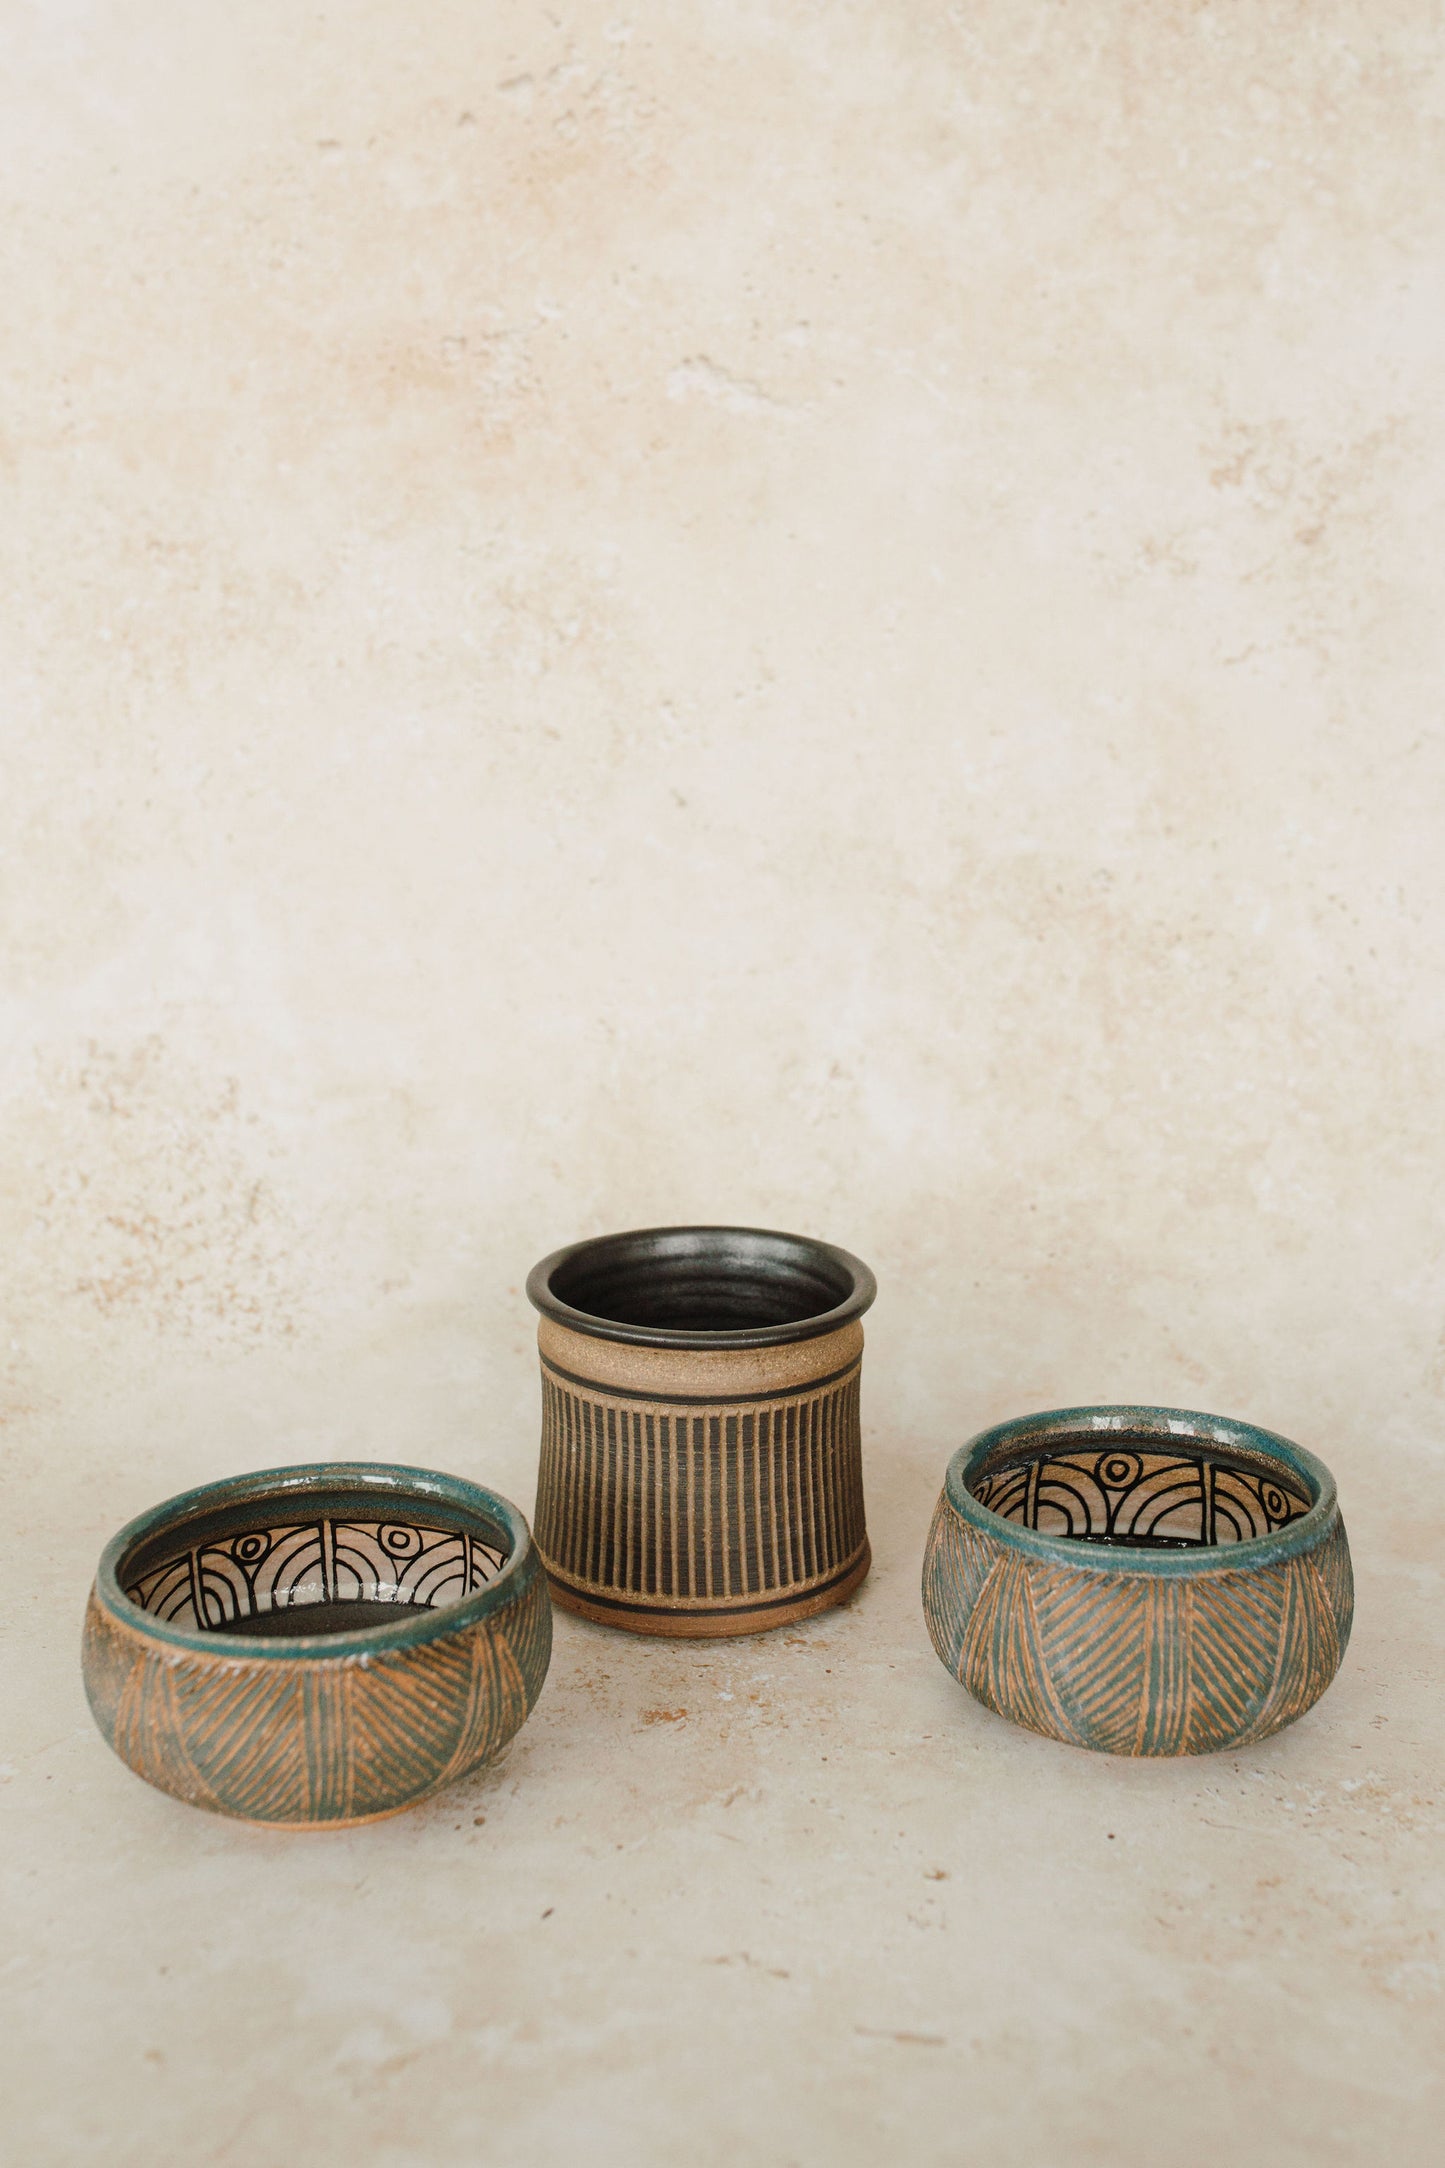 Vintage Studio Pottery (set of 2 bowls)